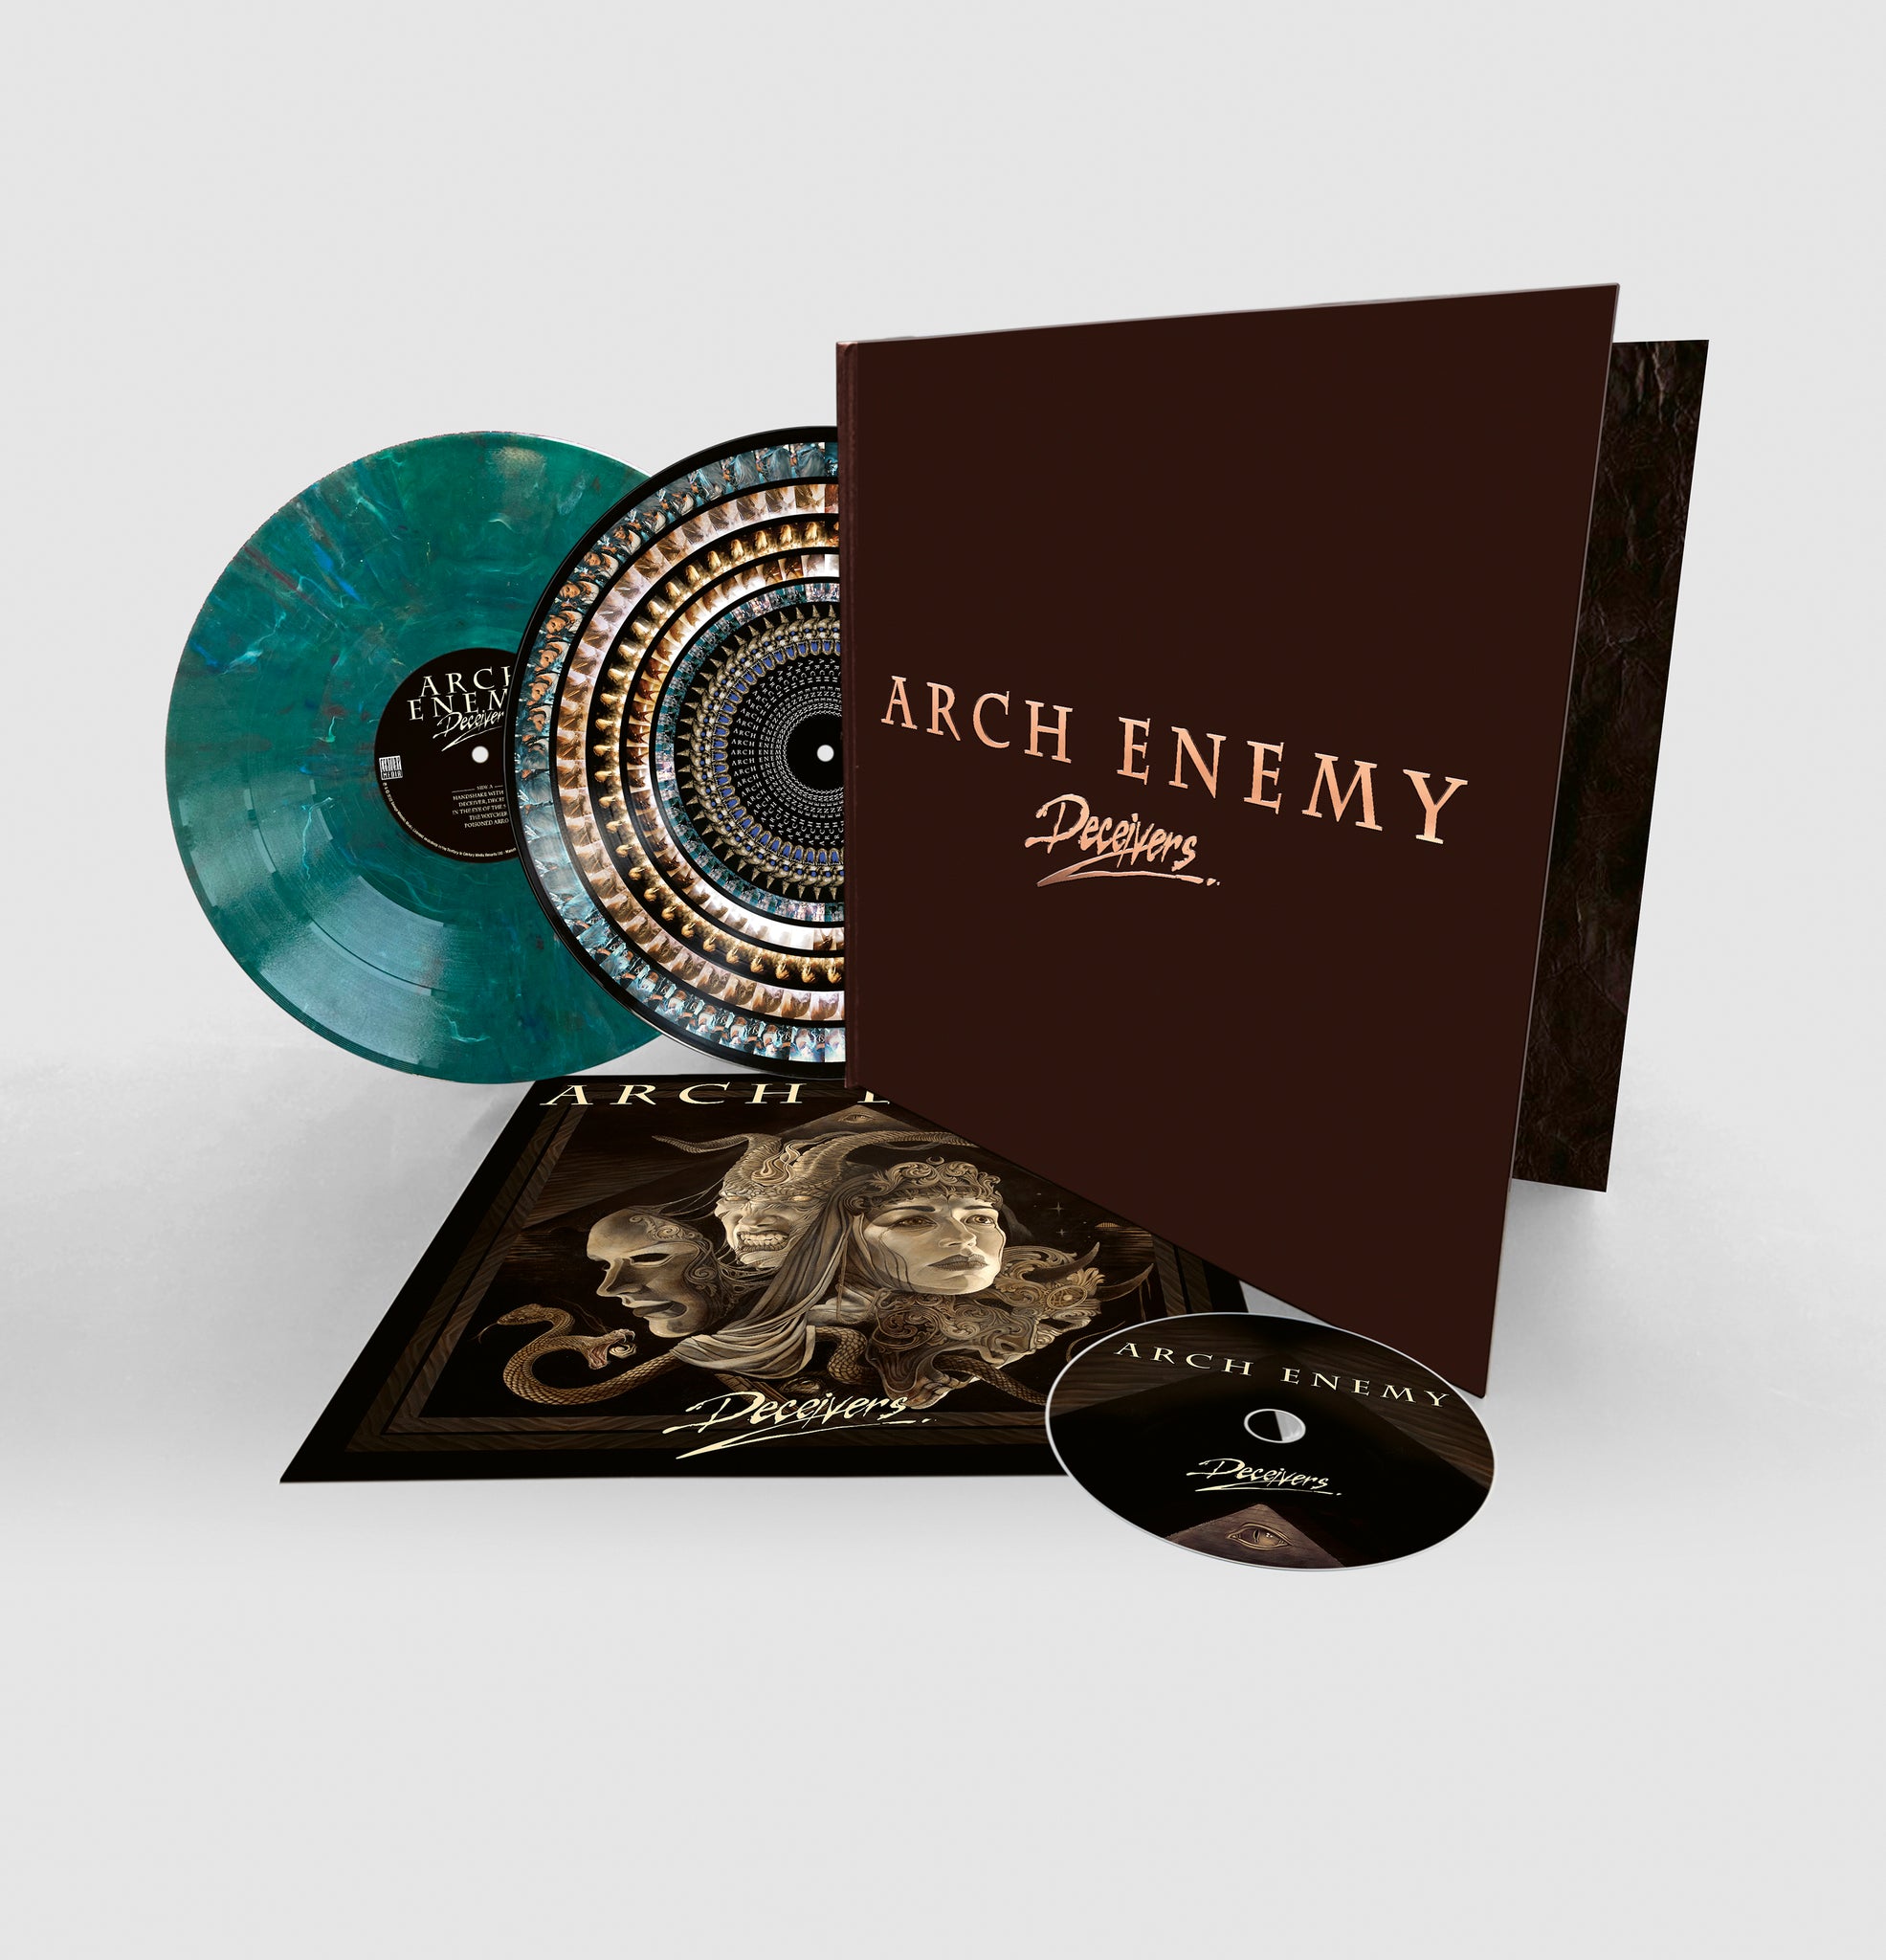 ARCH ENEMY - Deceivers - Ltd Deluxe 2xLP + CD Artwork